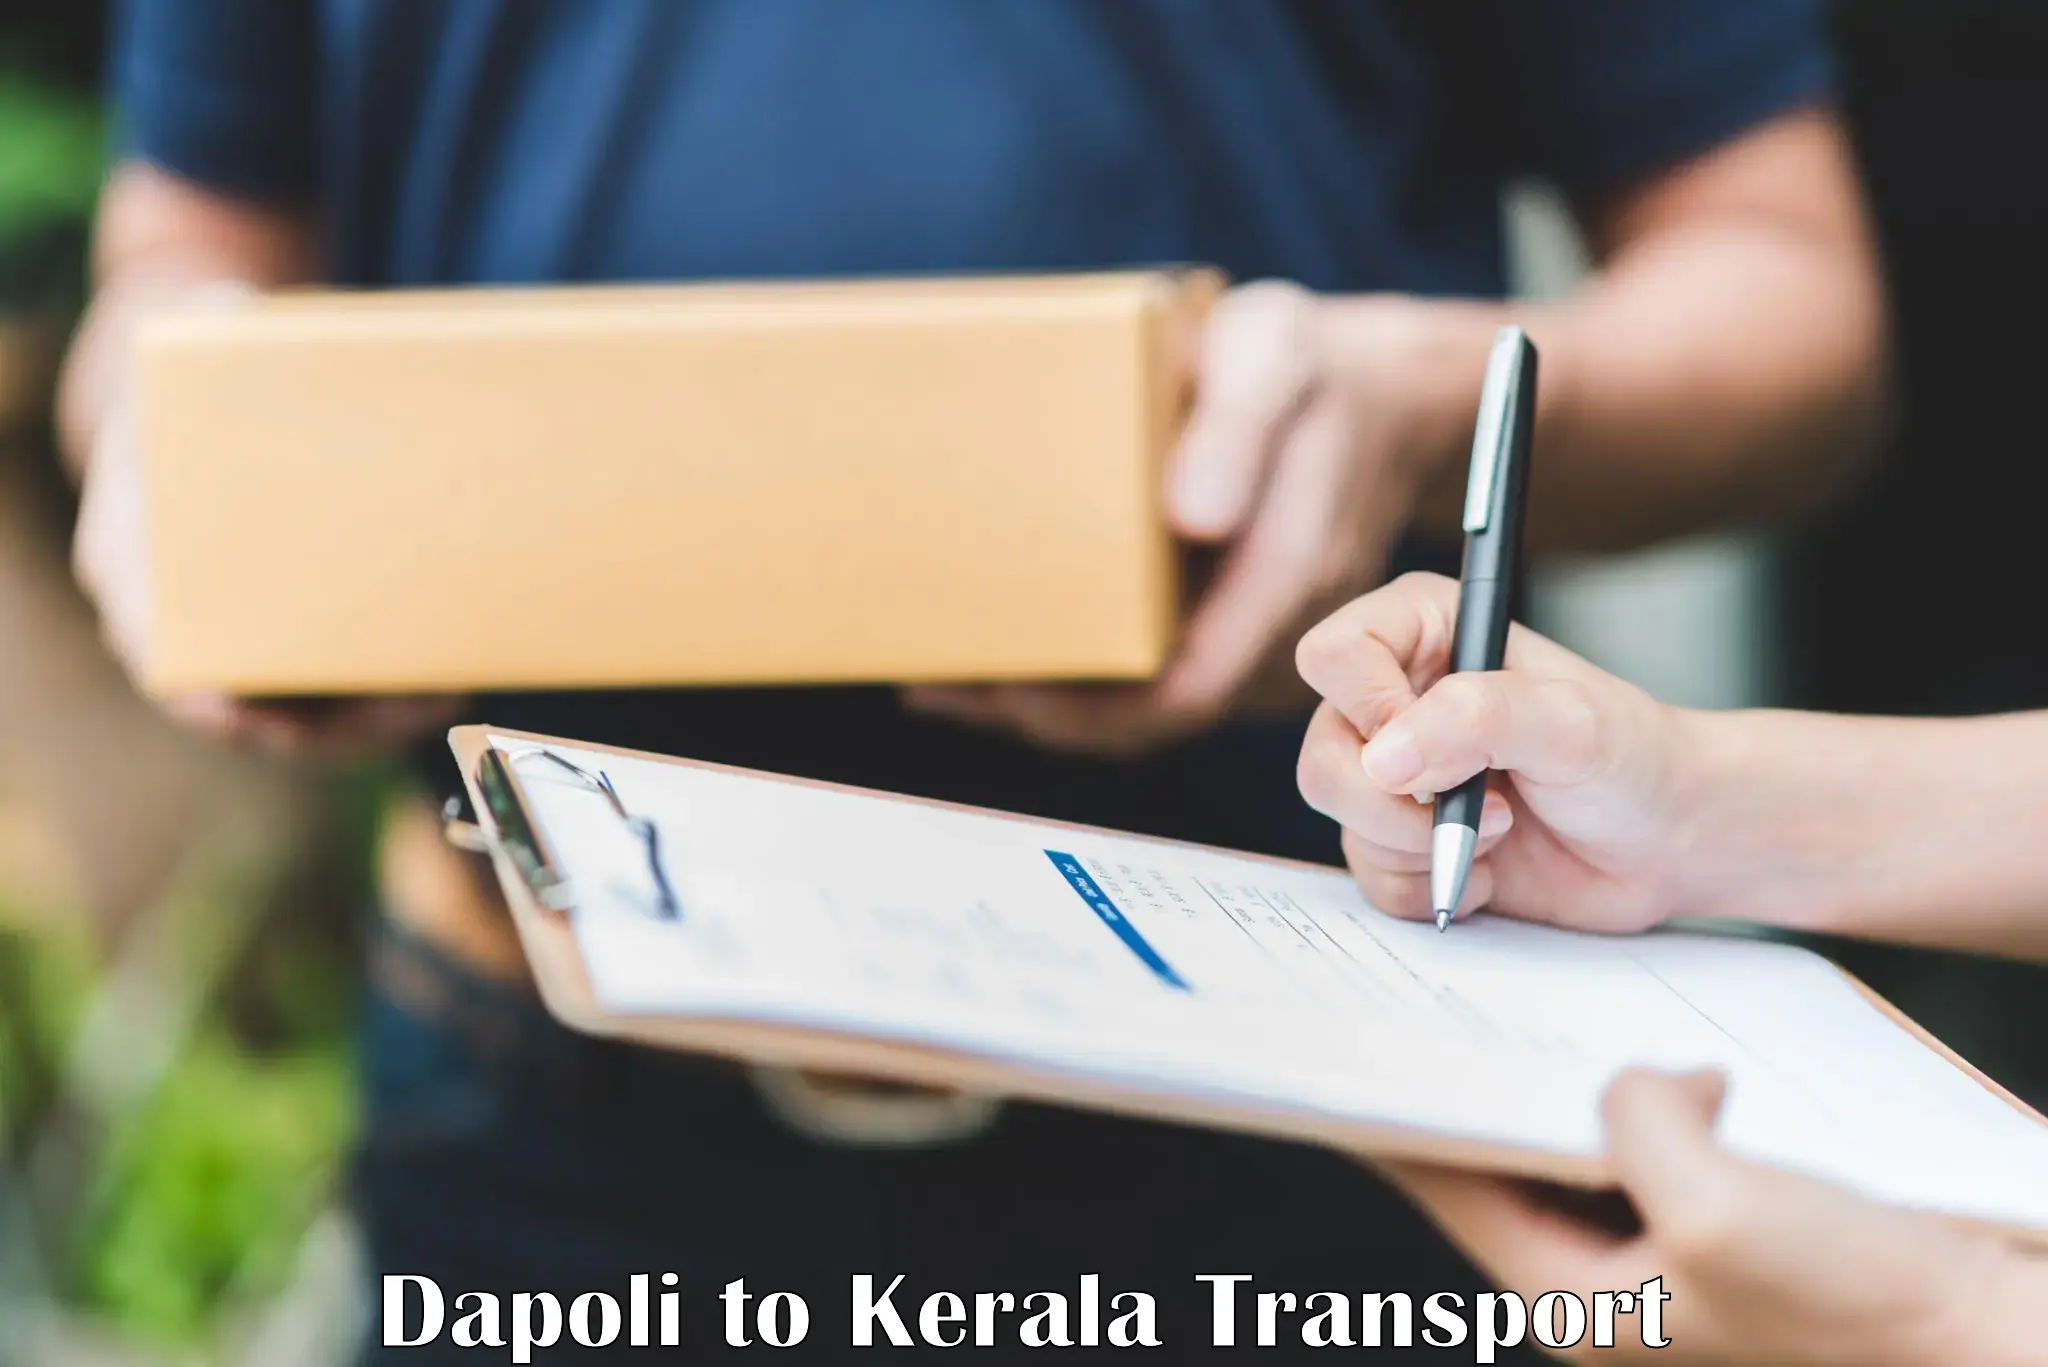 Online transport service Dapoli to Vaikom